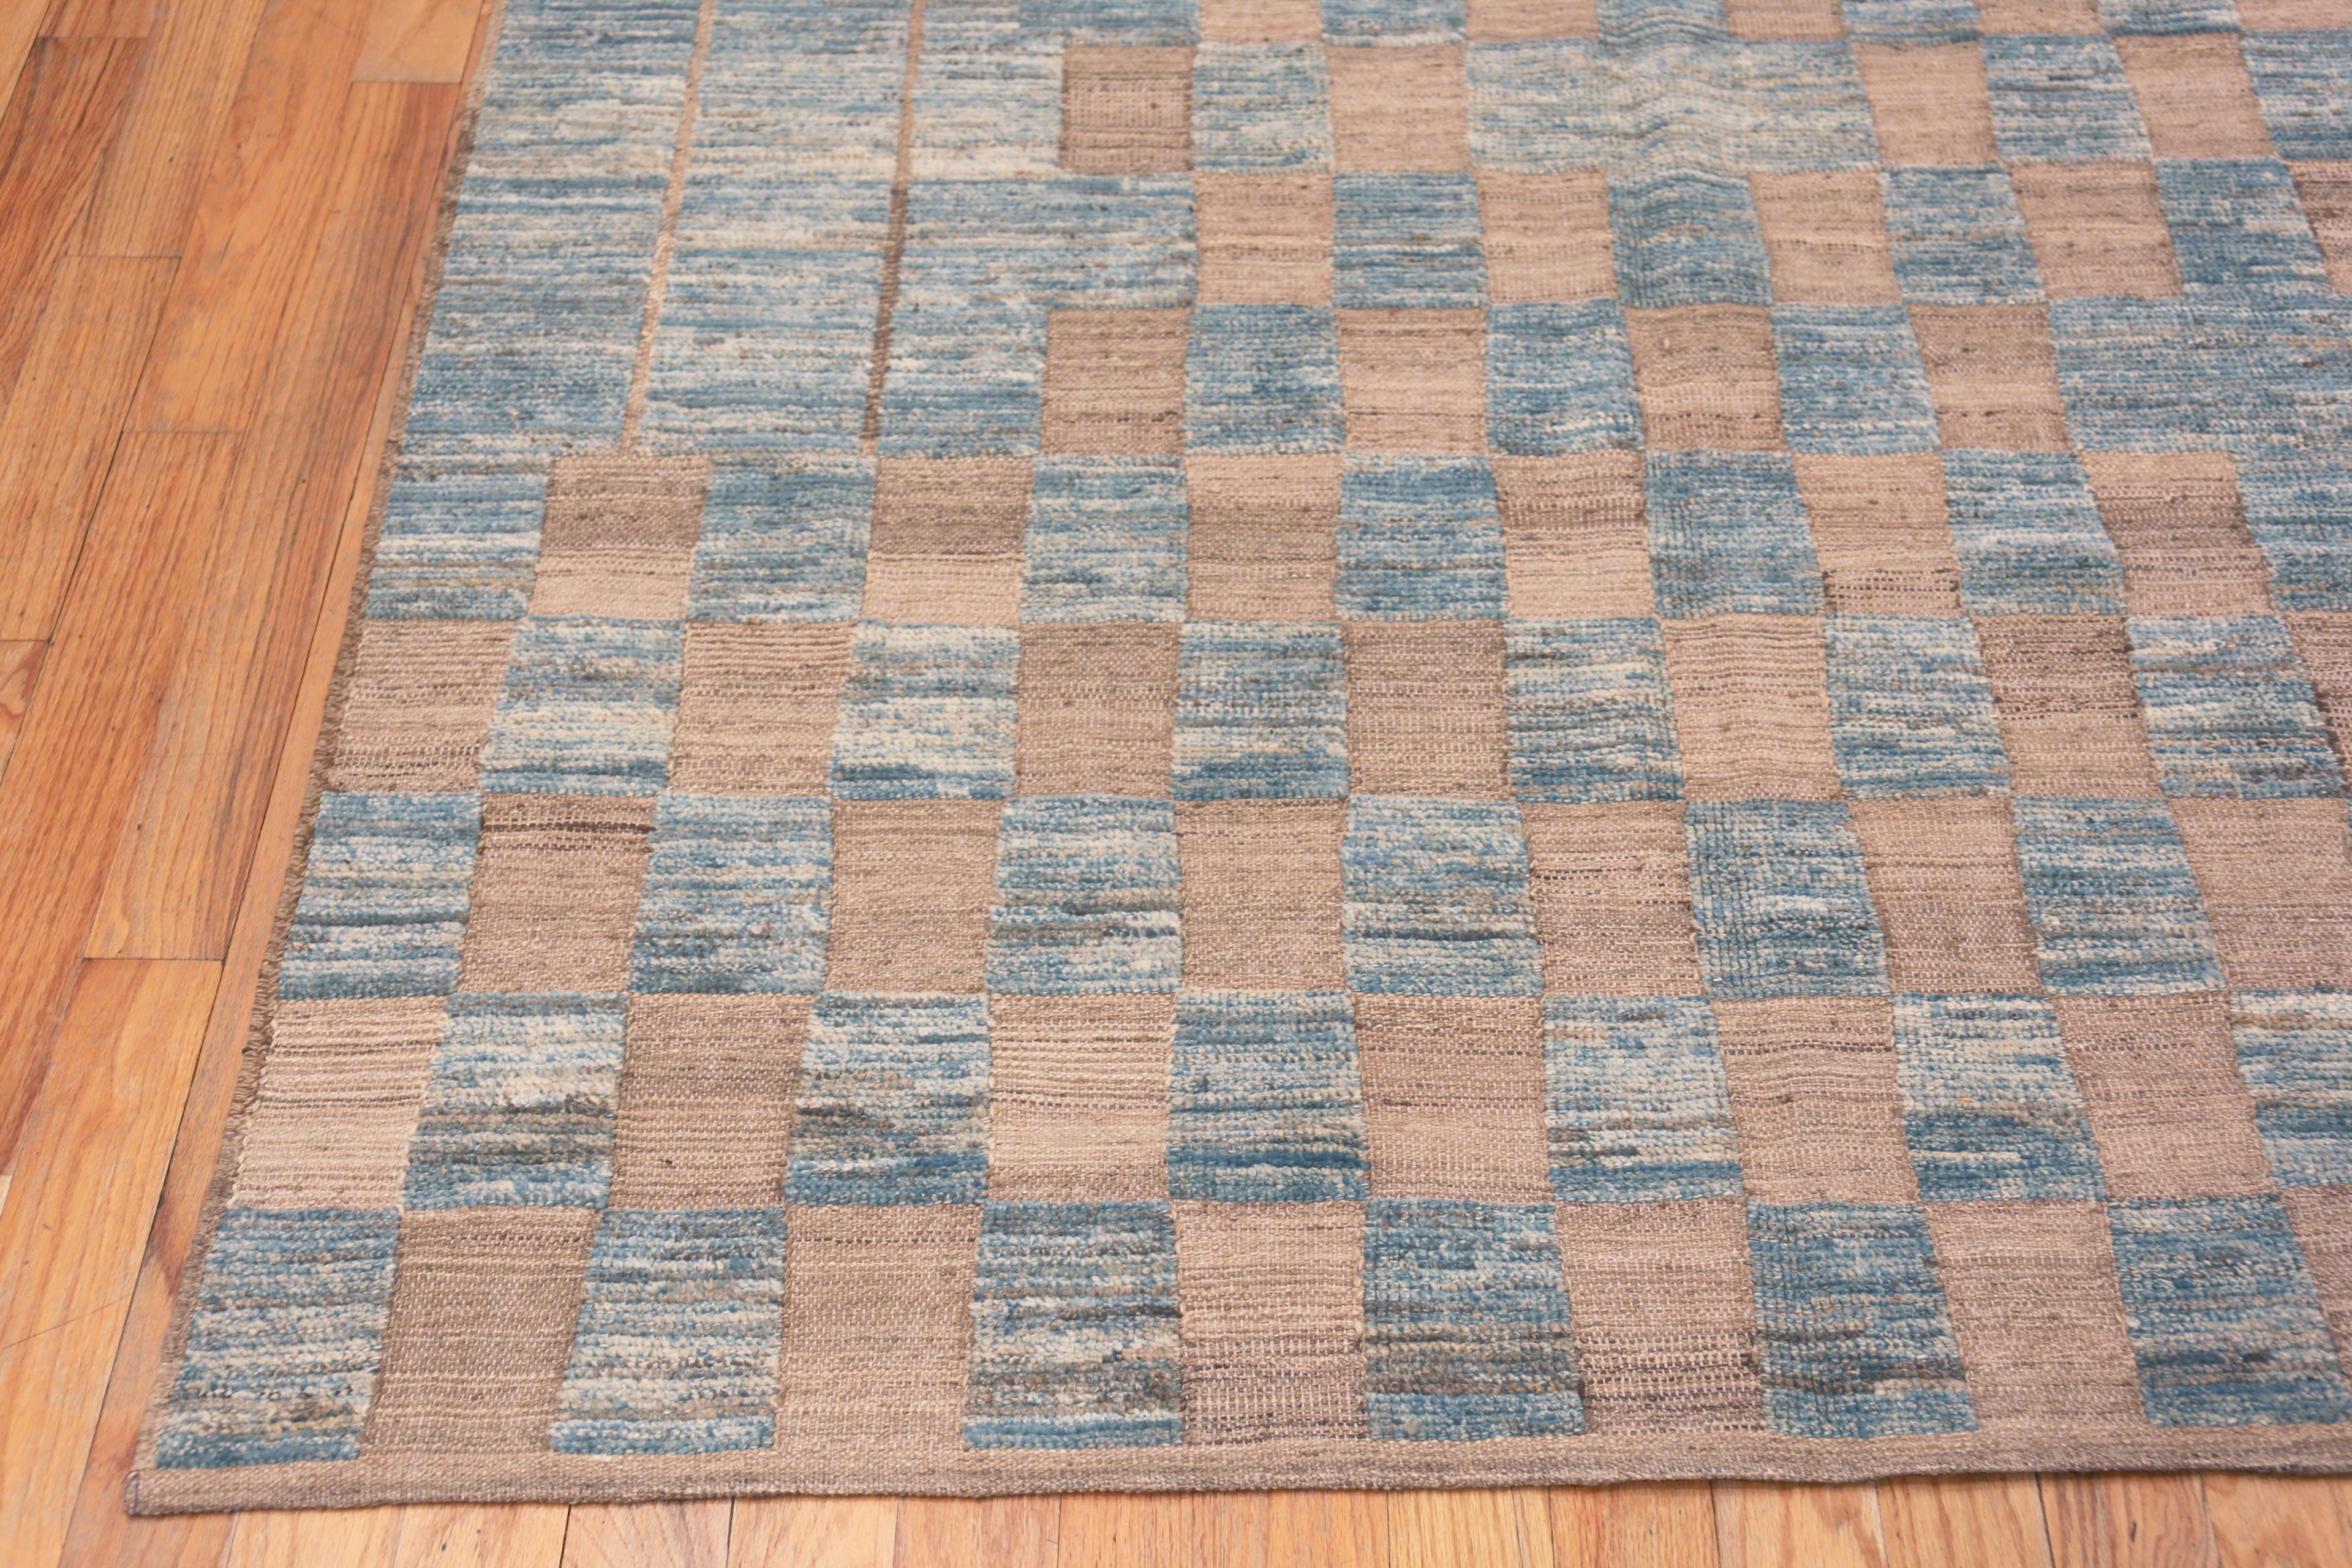 Collection Nazmiyal, tapis tribal géométrique moderne, taille de pièce 8'4